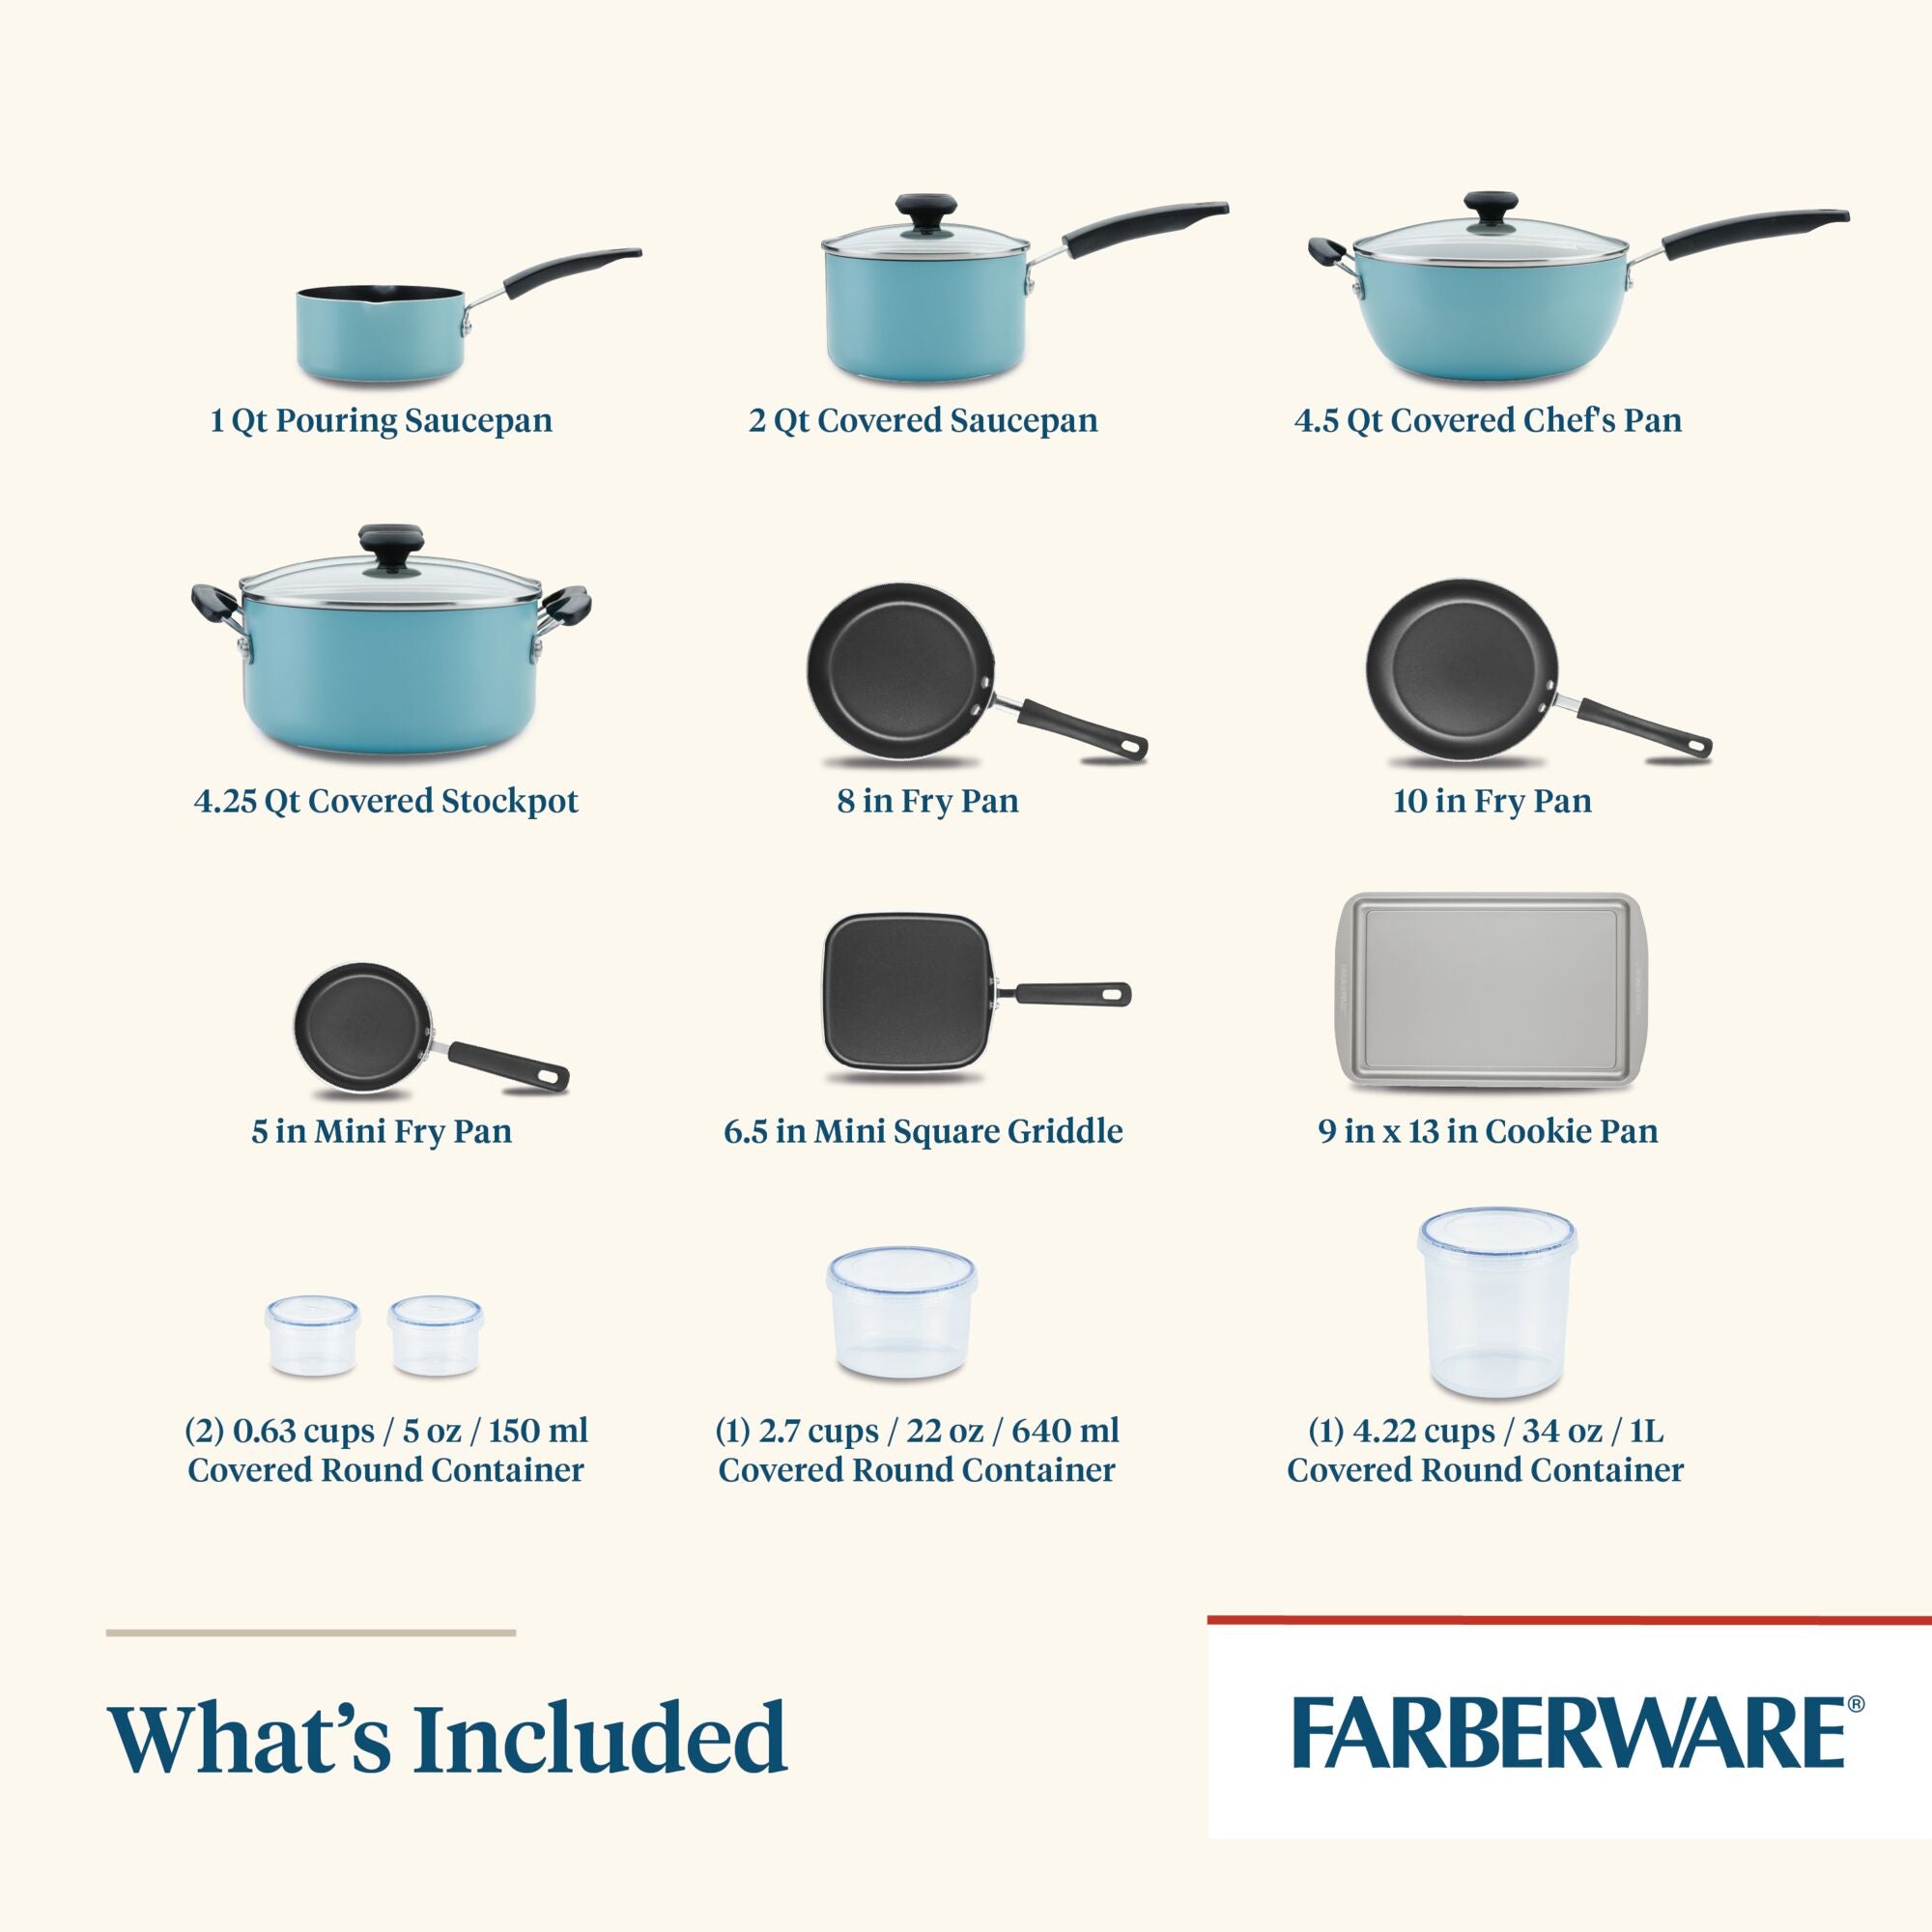 Farberware Insulated Nonstick 20 Baking Sheet & Reviews